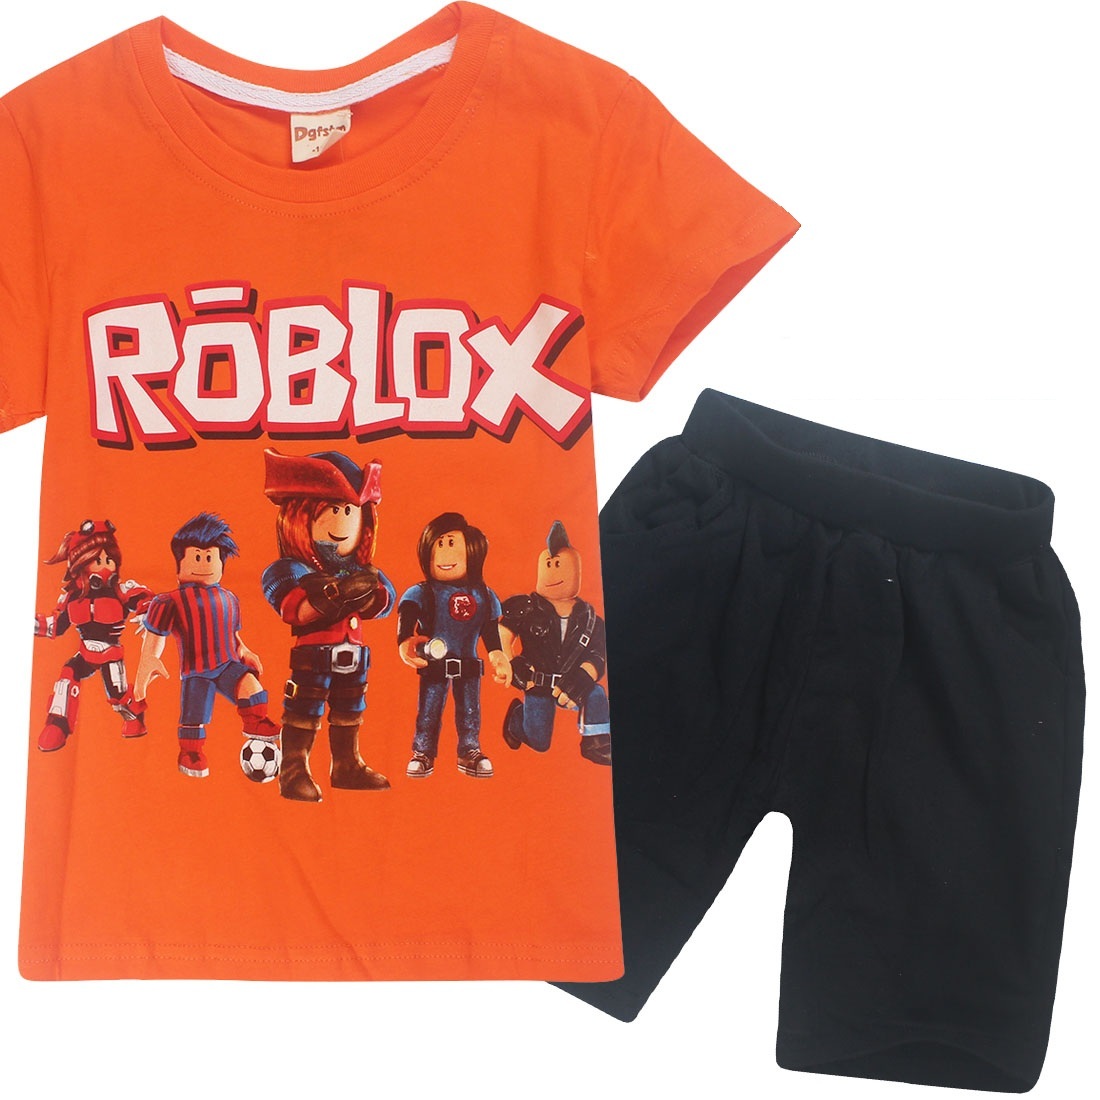 Roblox Theme New Arrival Orange Kids T Shirt And 50 Similar Items - roblox orange shirt